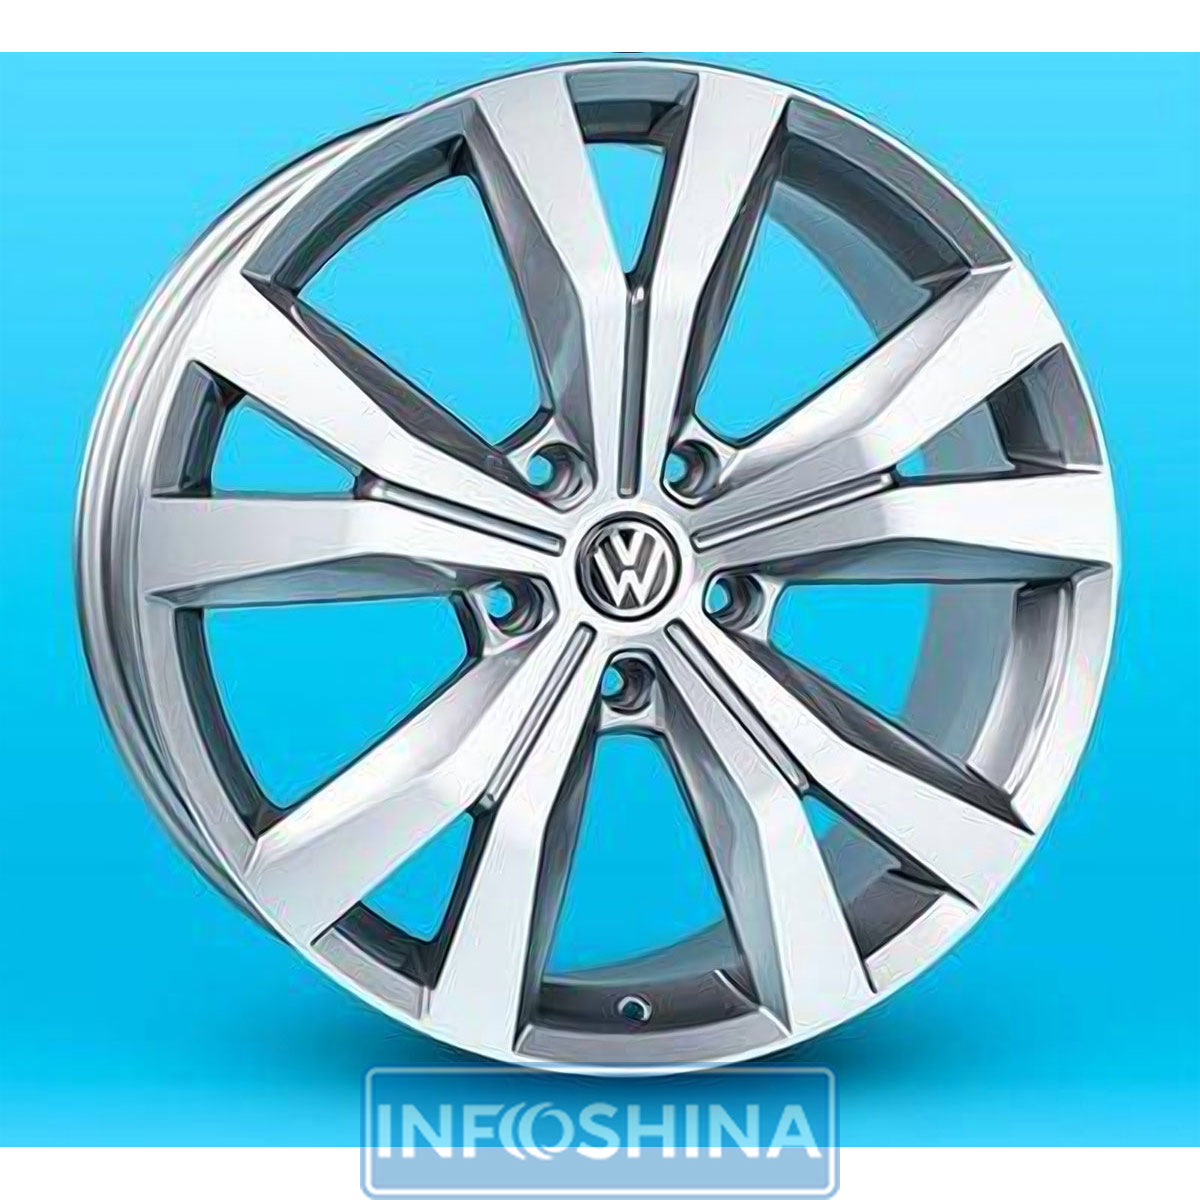 Купить диски Replica Volkswagen A-R140 GF R20 W9.5 PCD5x130 ET50 DIA71.6